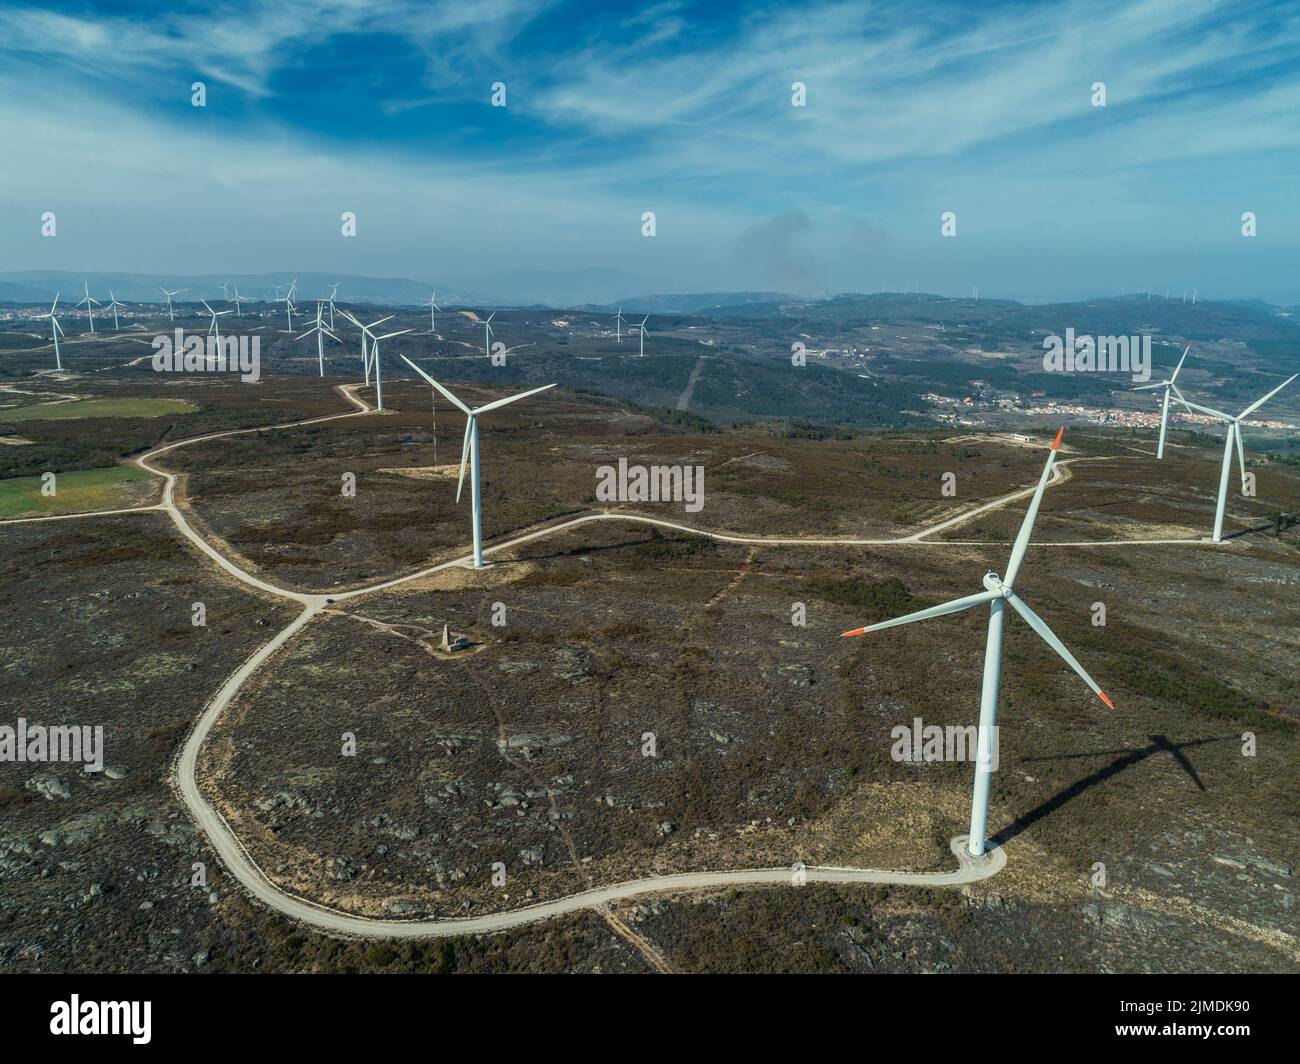 Windmills or wind turbine on wind farm Stock Photo